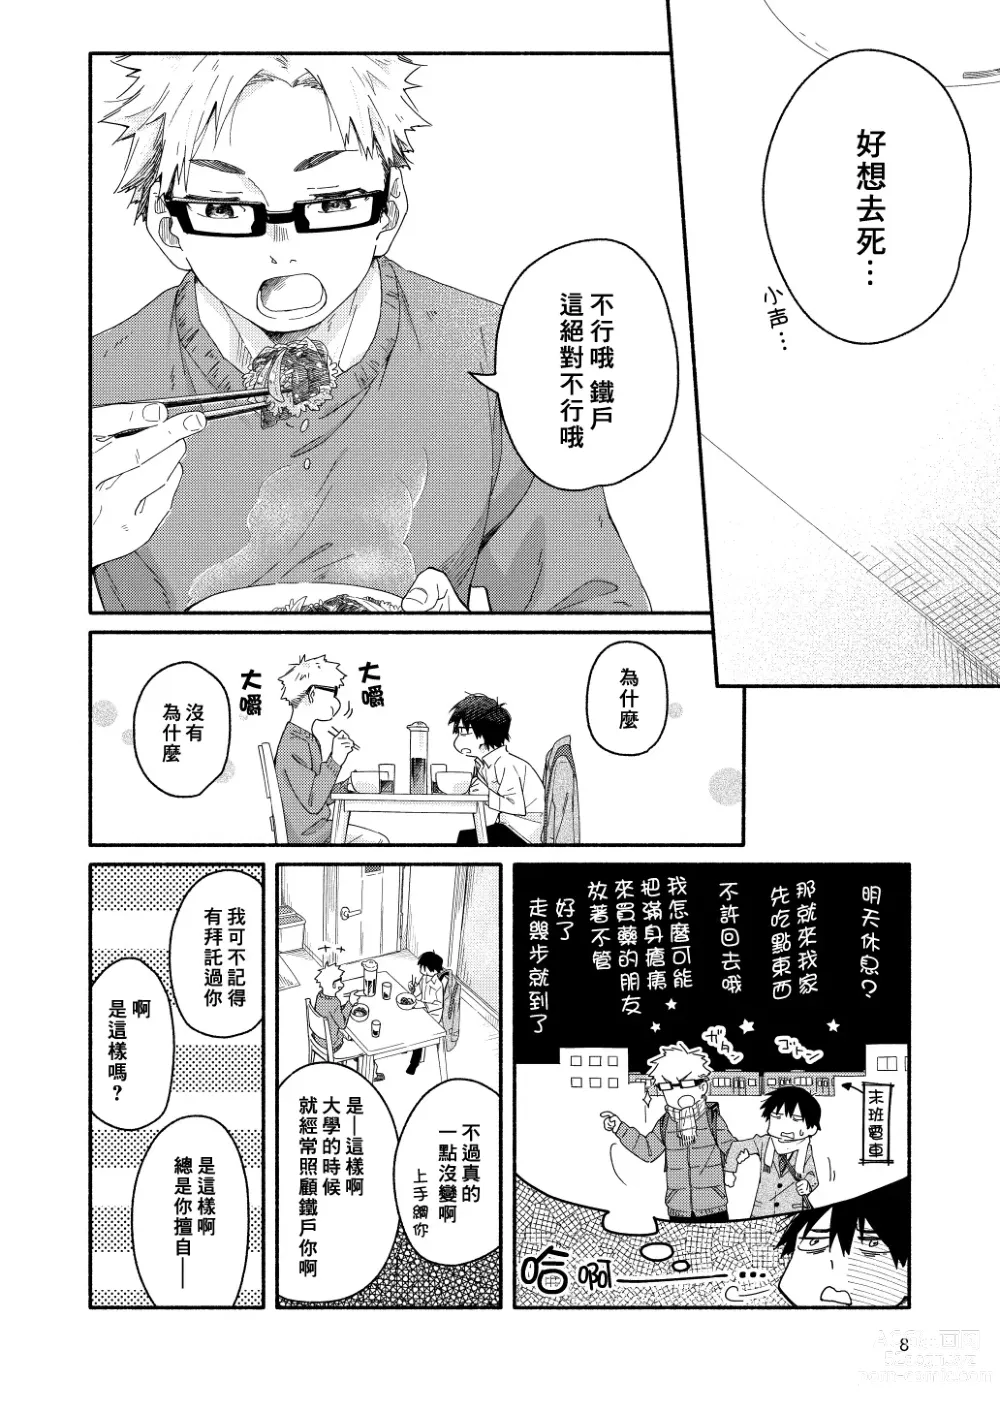 Page 6 of doujinshi sugar-ism